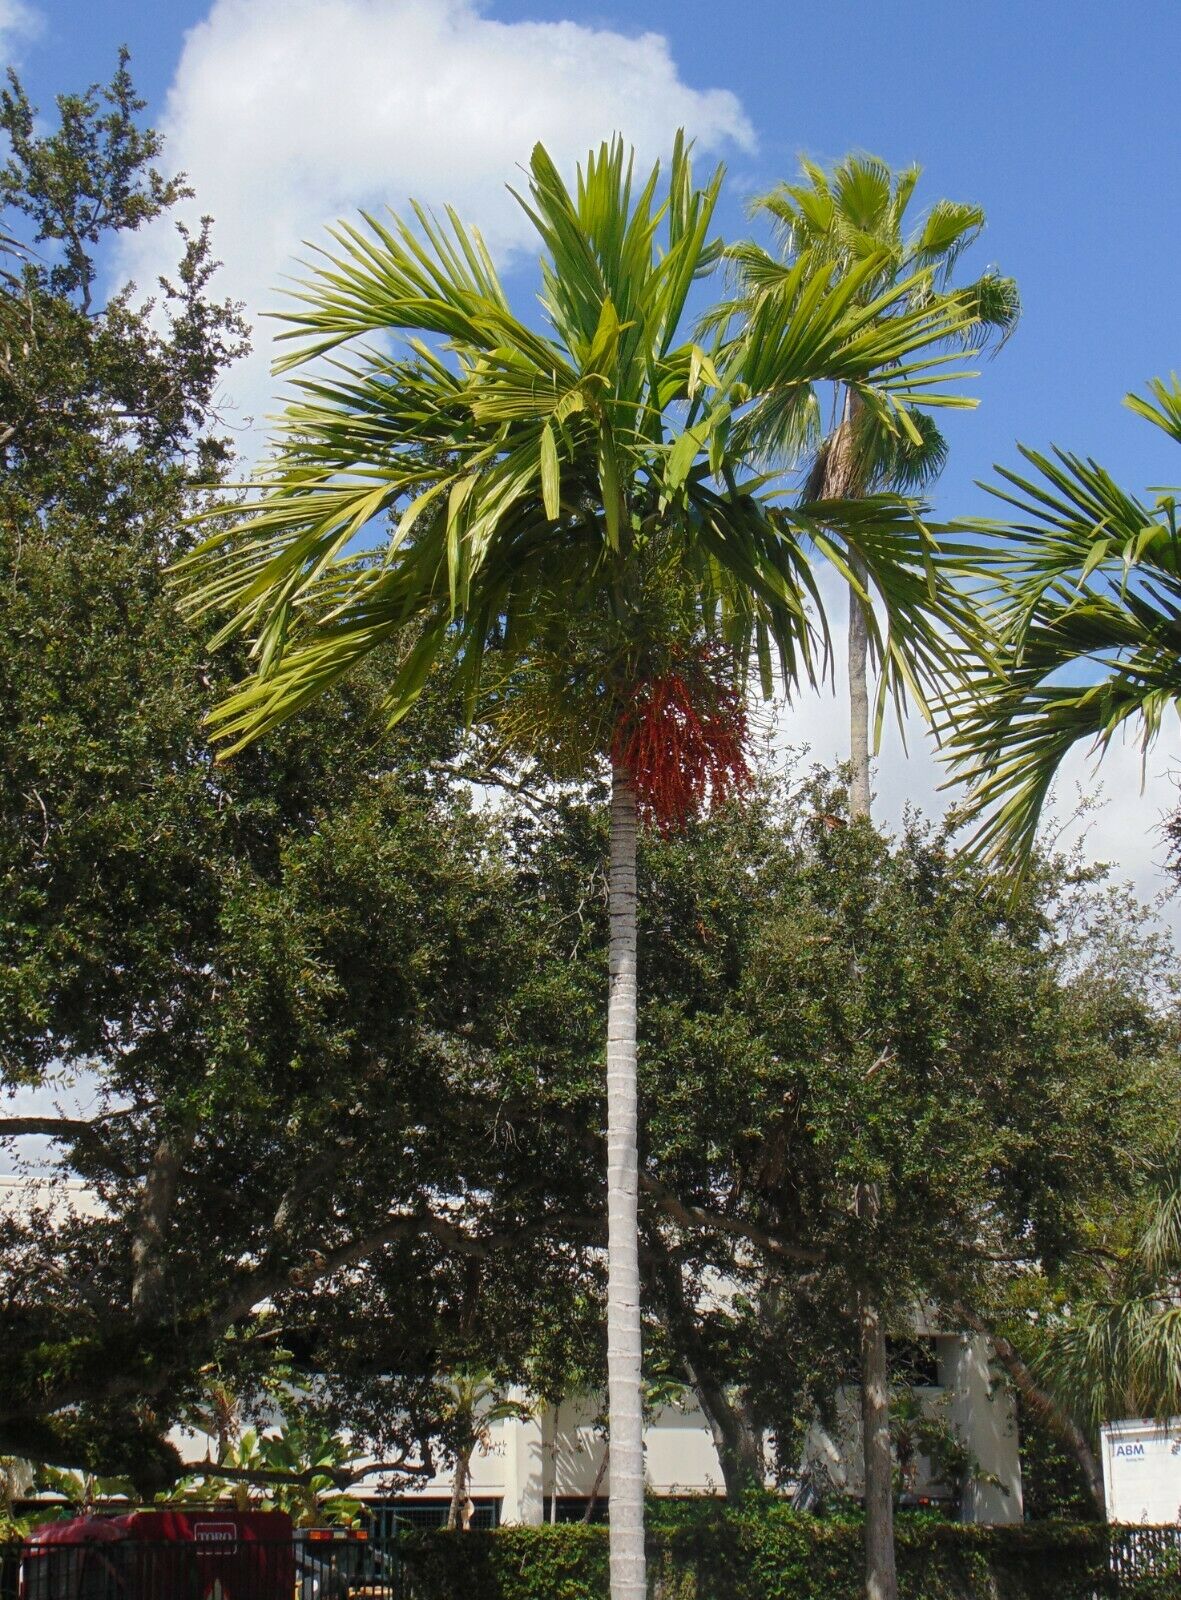 solitary palm tree